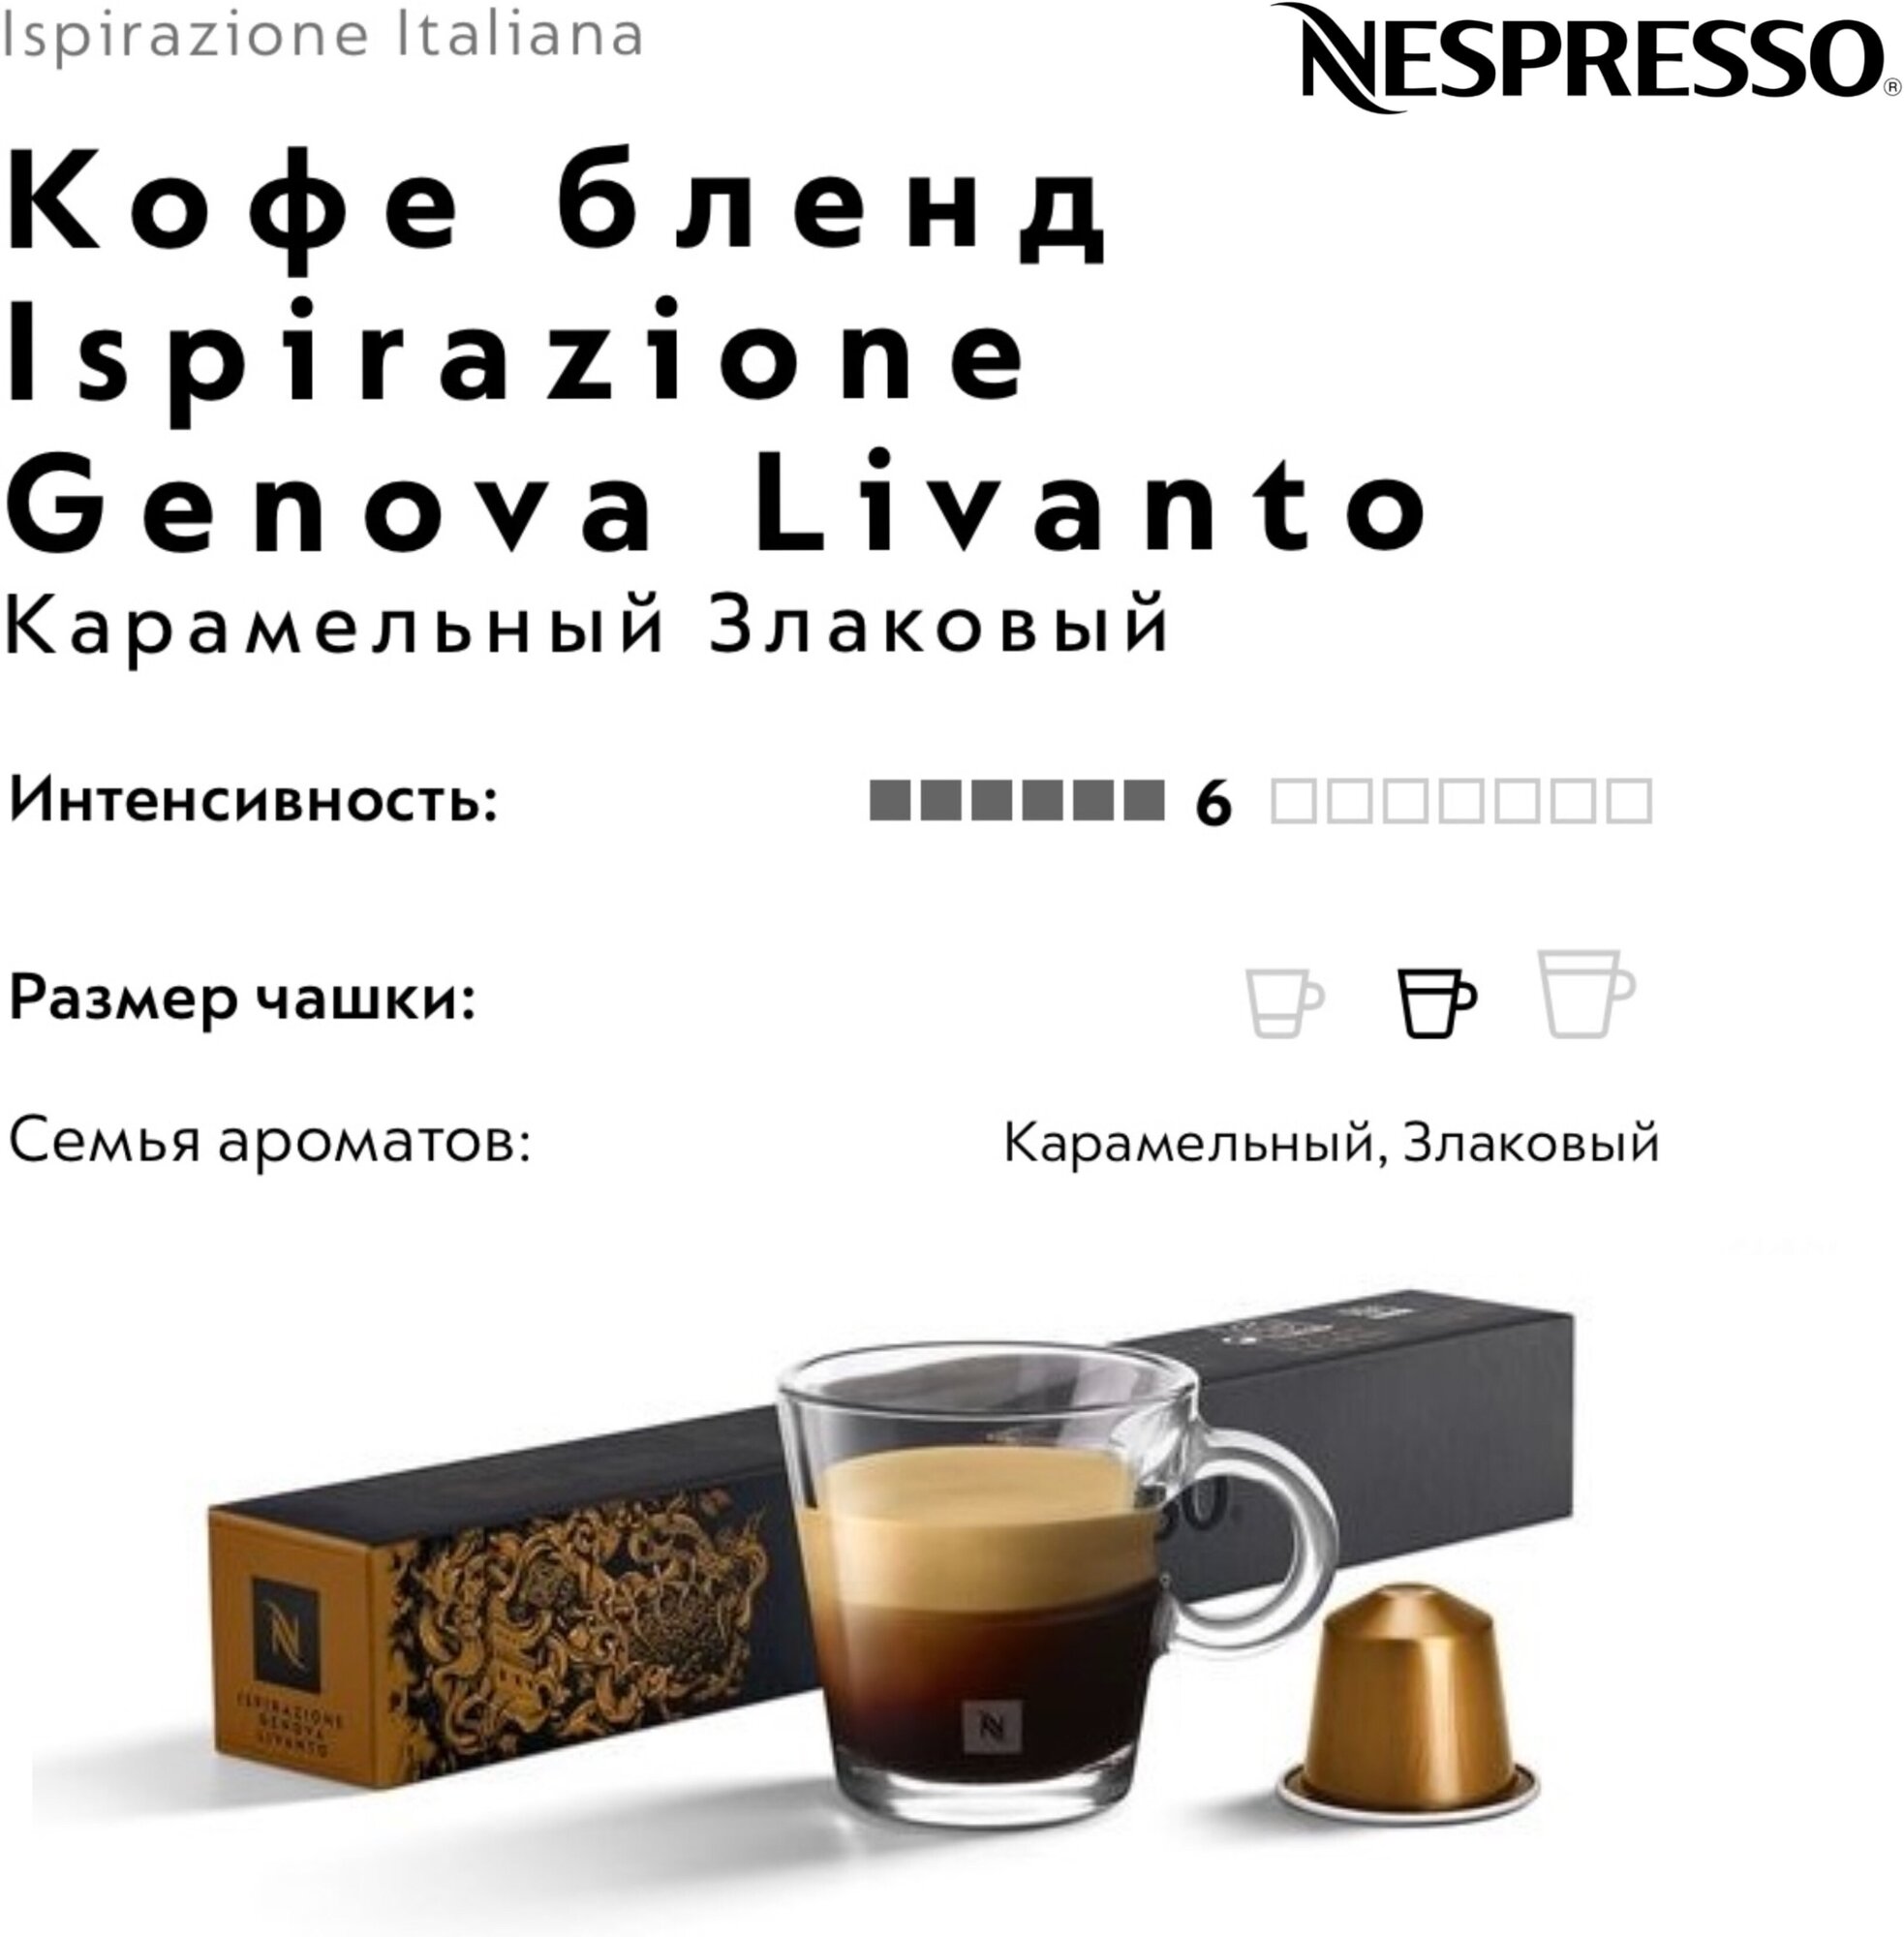 Кофе в капсулах Nespresso Ispirazione Genova Livanto